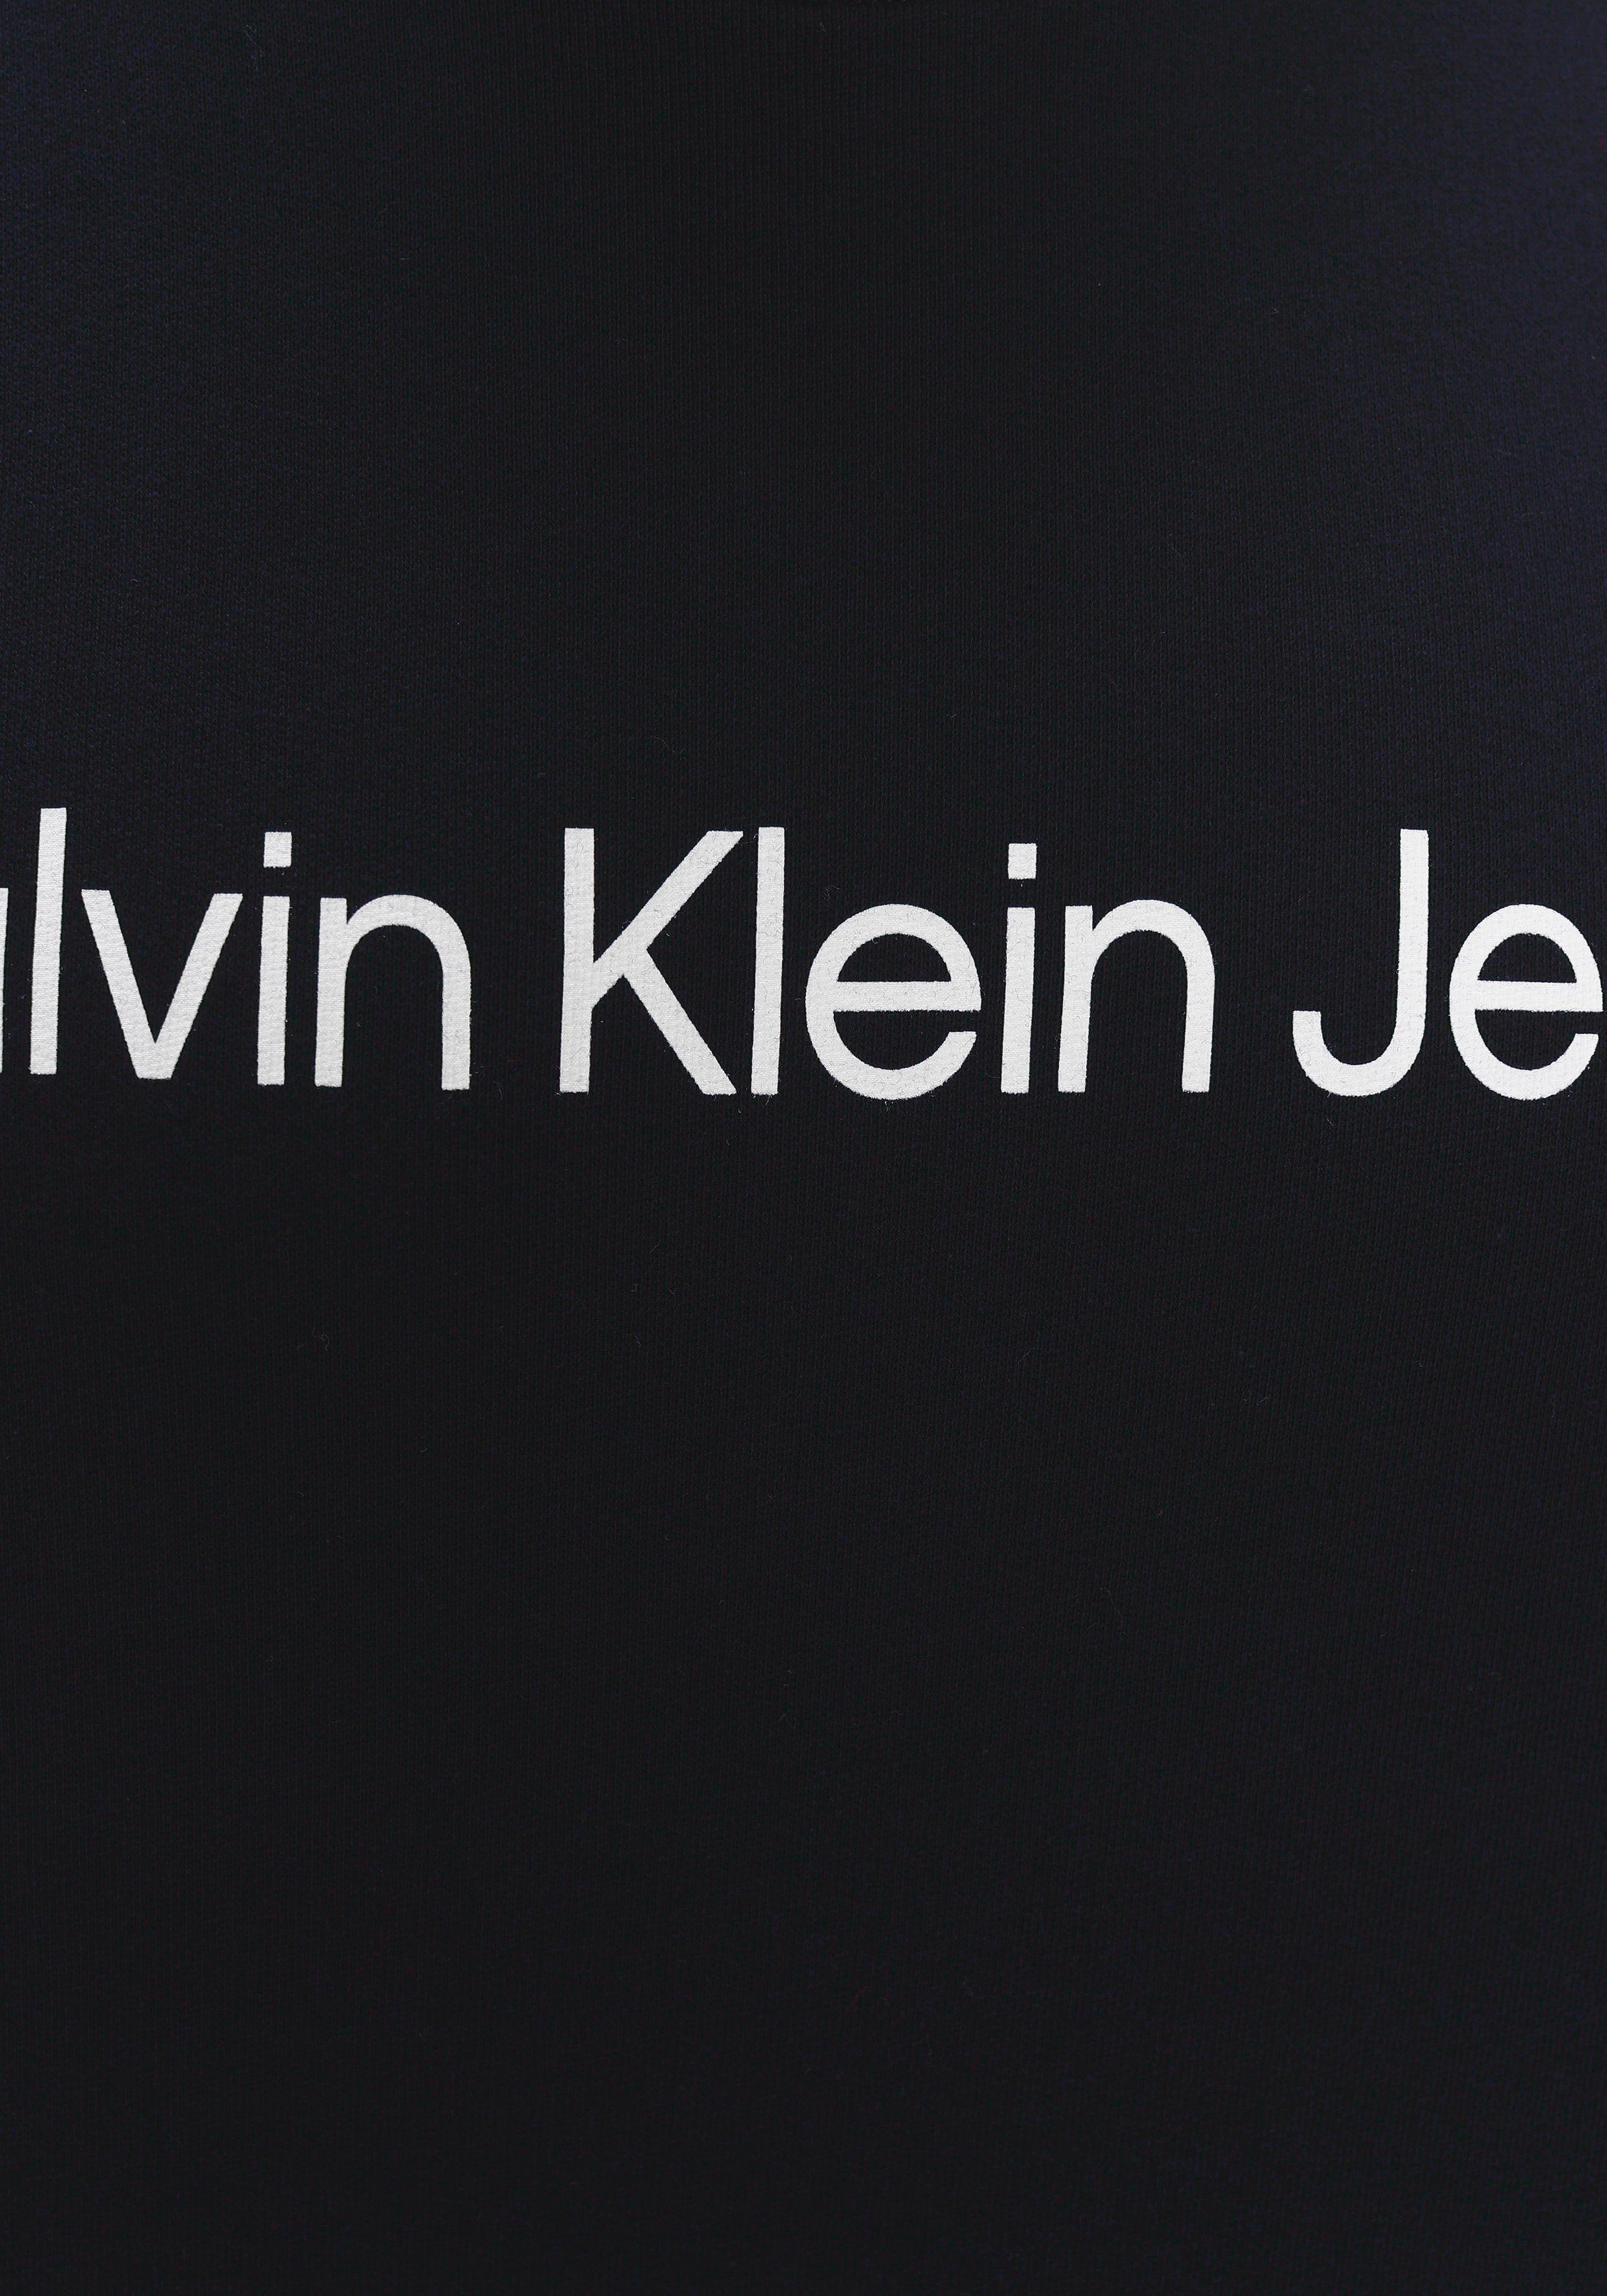 Calvin Klein Jeans Sweatshirt CORE INSTIT LOGO SWEATSHIRT